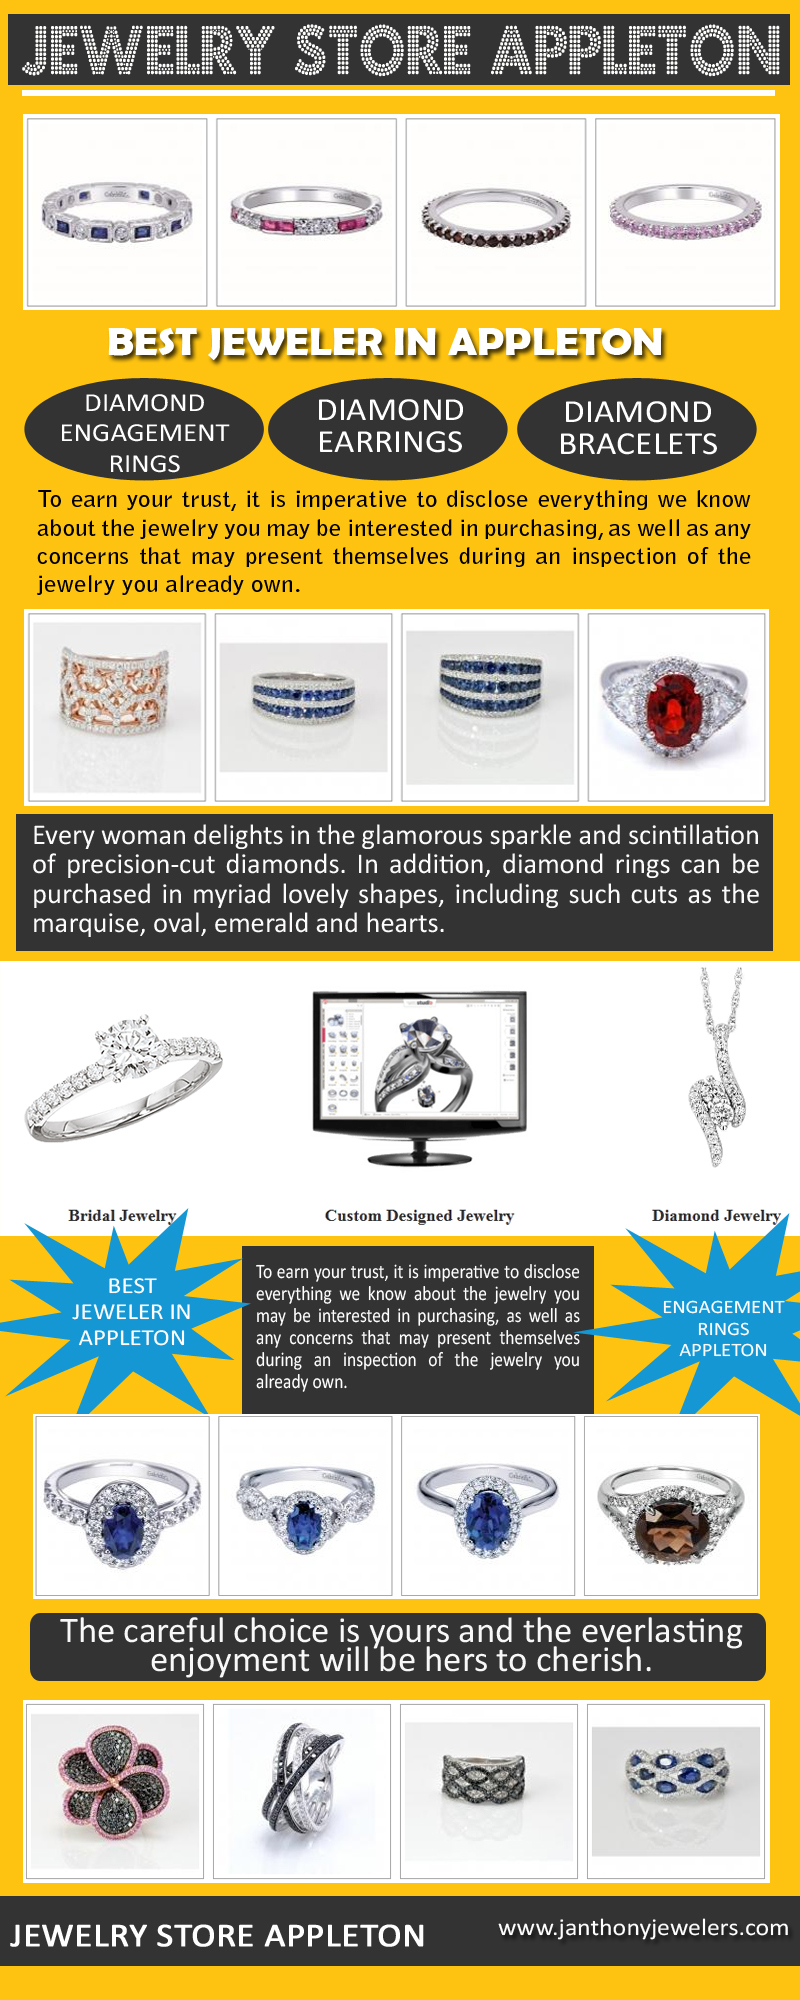 Appleton Jeweler best jeweler in appleton diamond engagement rings appleton engagement rings appleton Jewelry Store Appleton